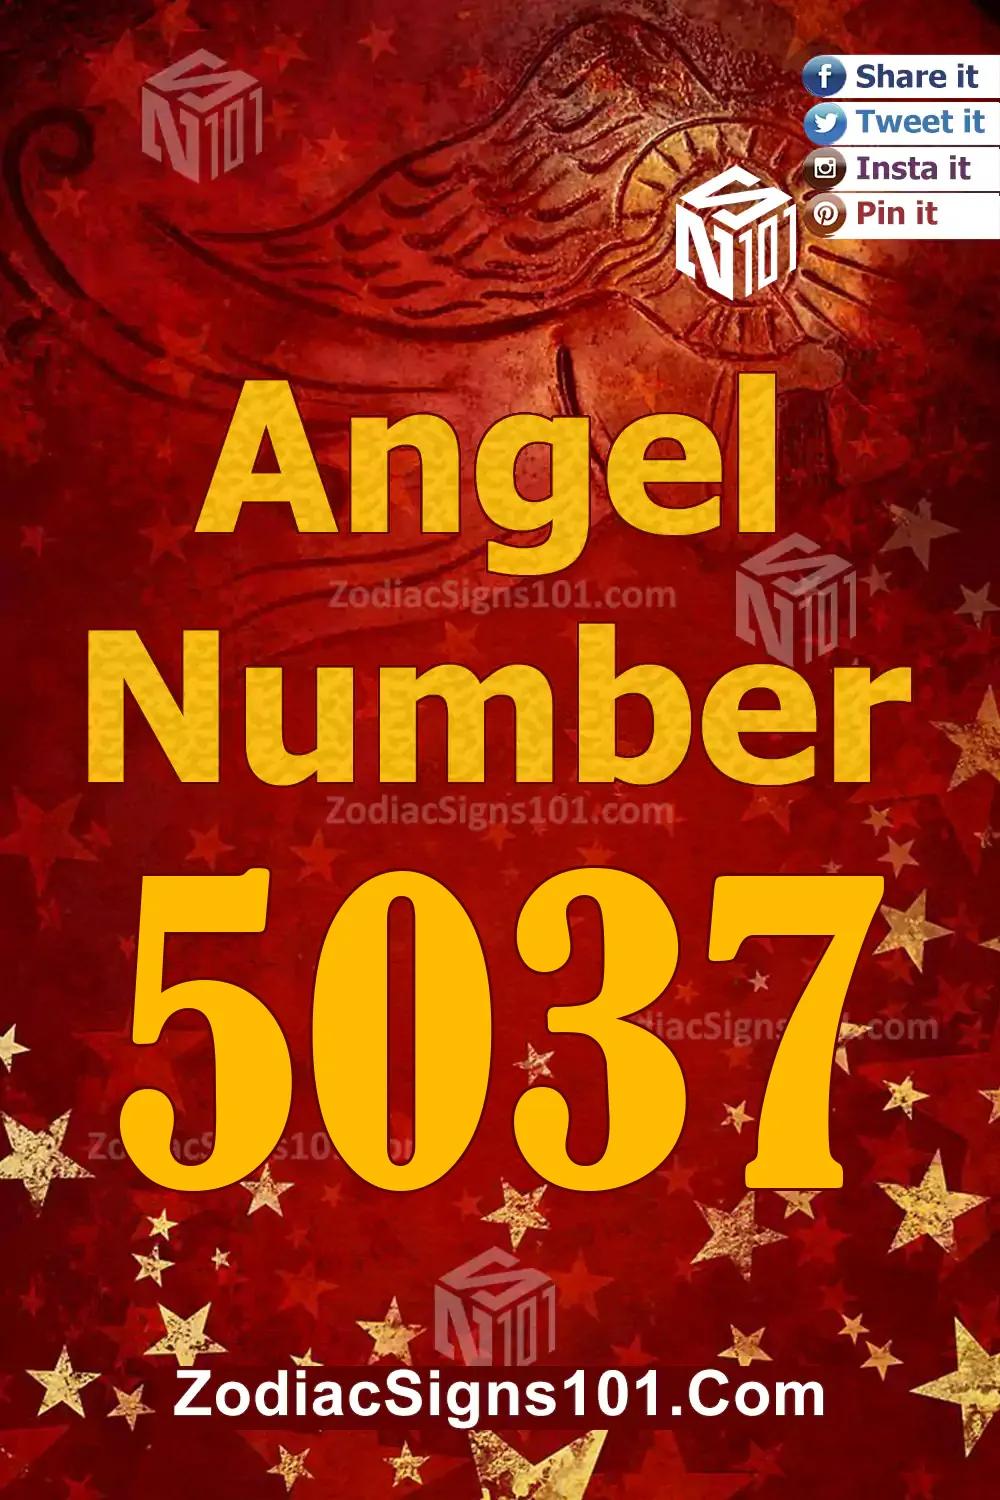 5037-Angel-Number-Meaning.jpg